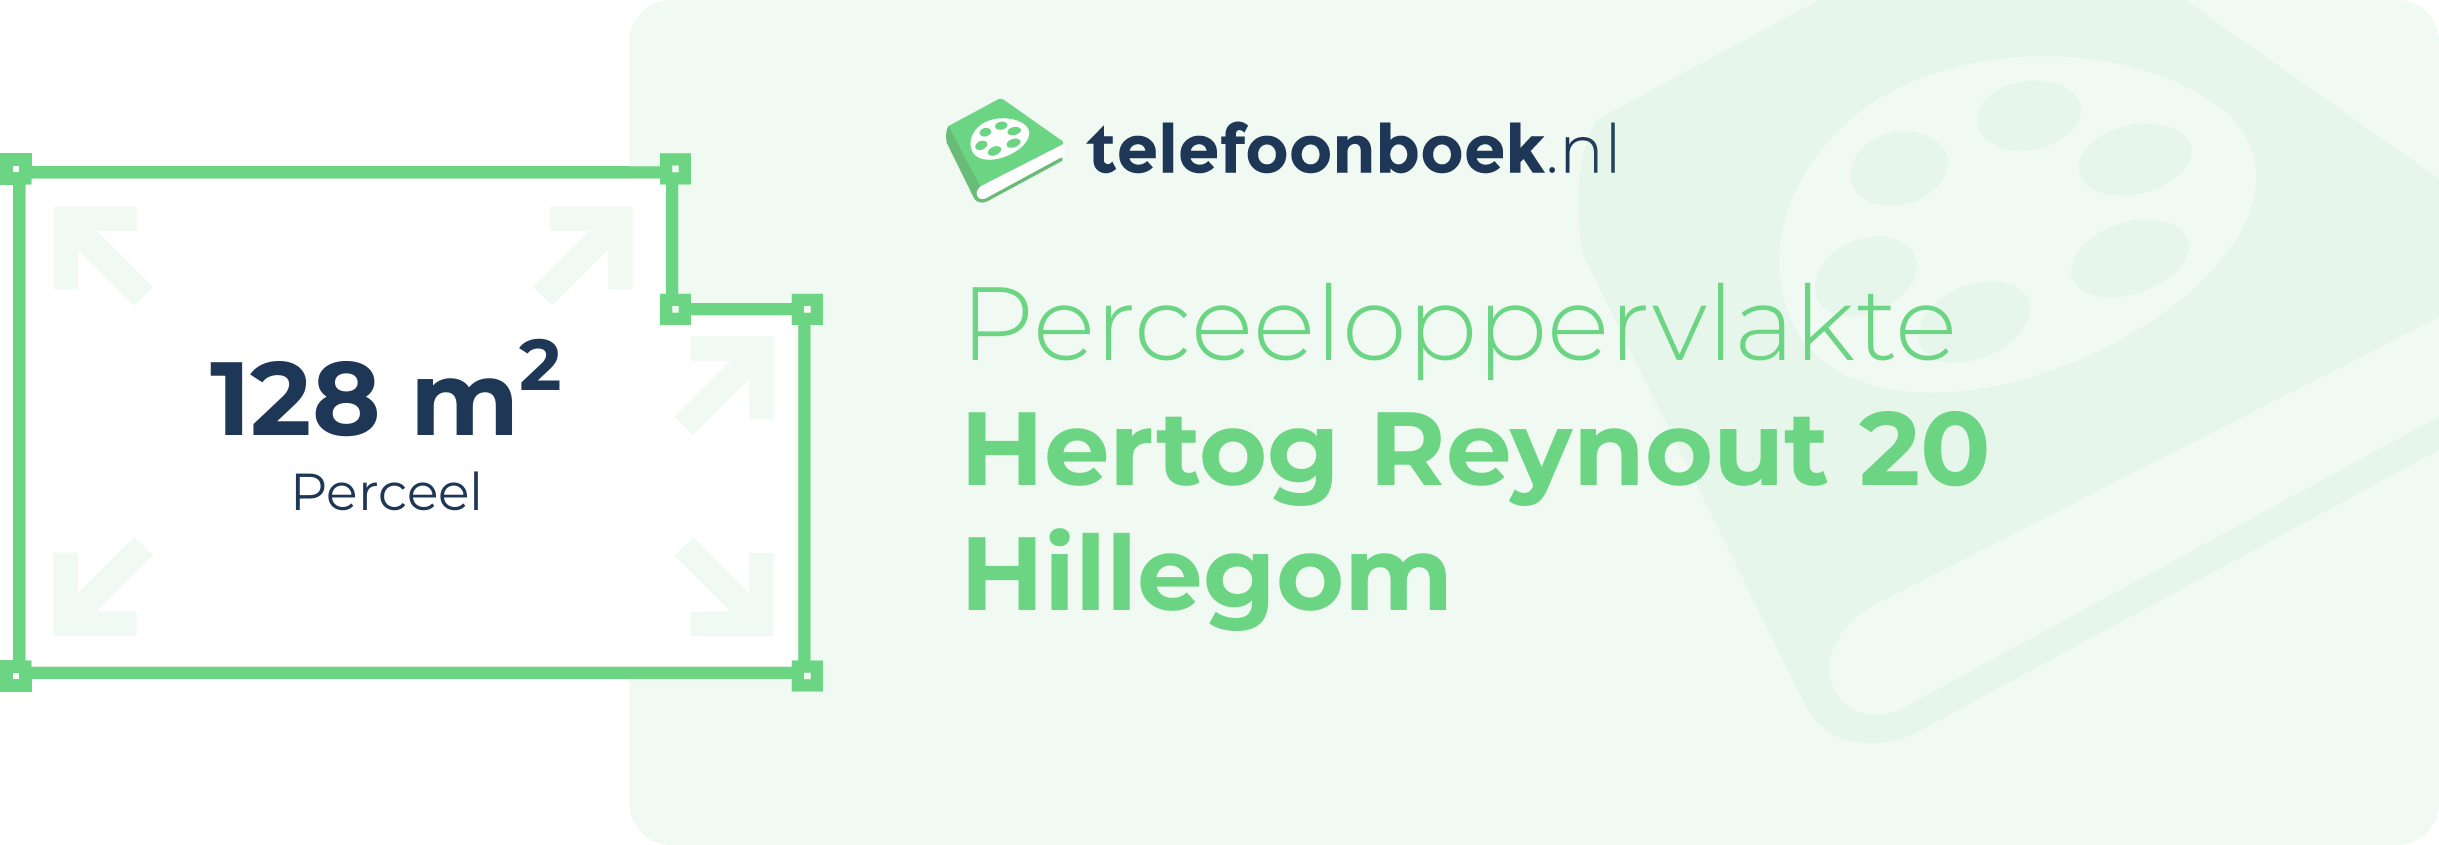 Perceeloppervlakte Hertog Reynout 20 Hillegom